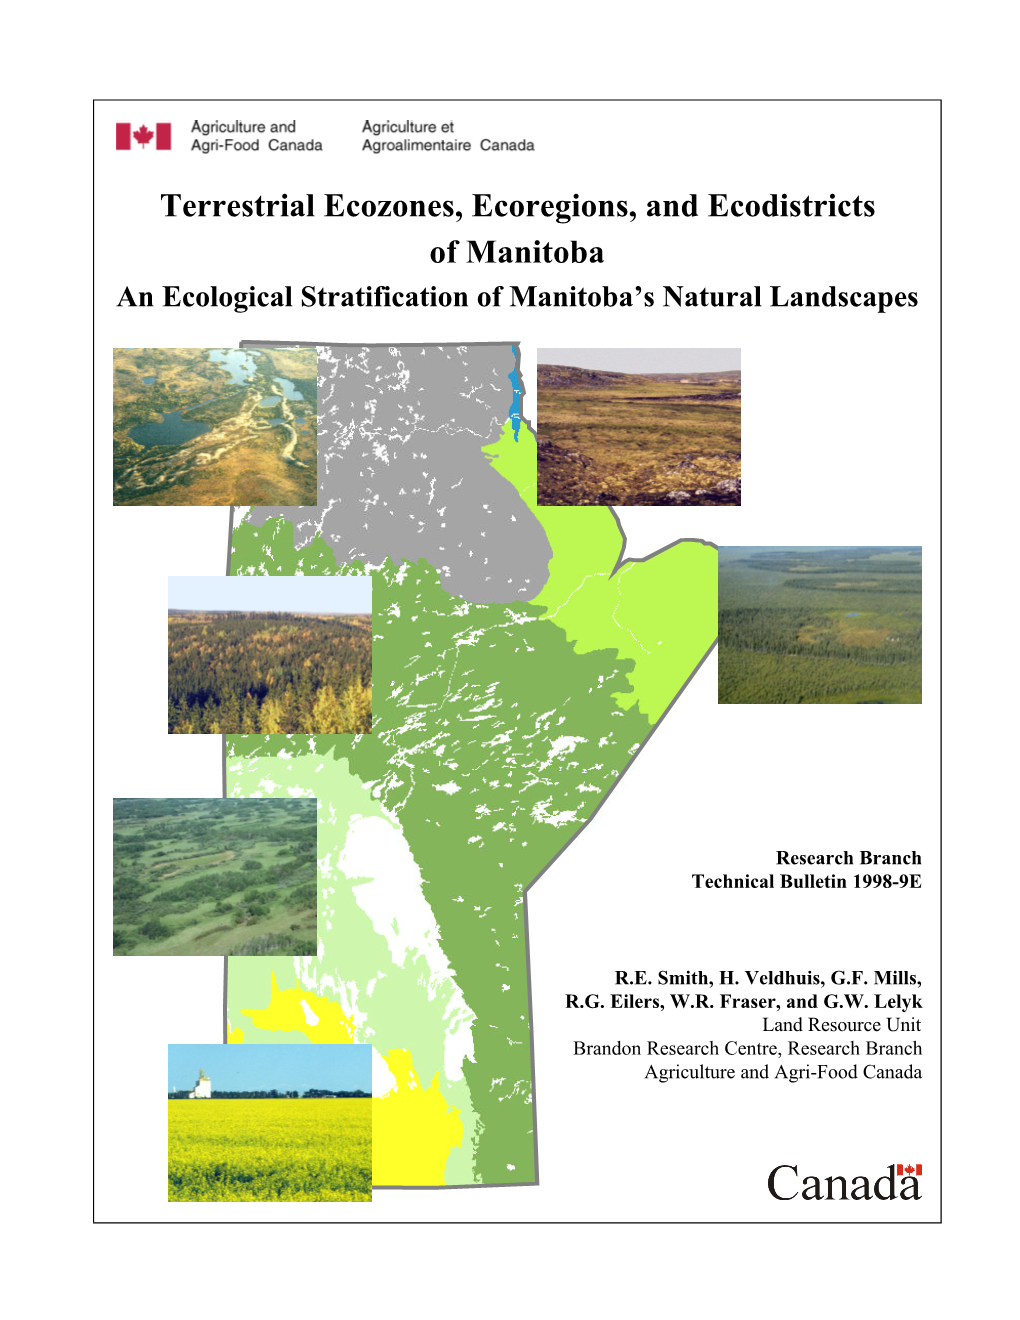 Terrestrial Ecozones, Ecoregions and Ecodistricts of Manitoba